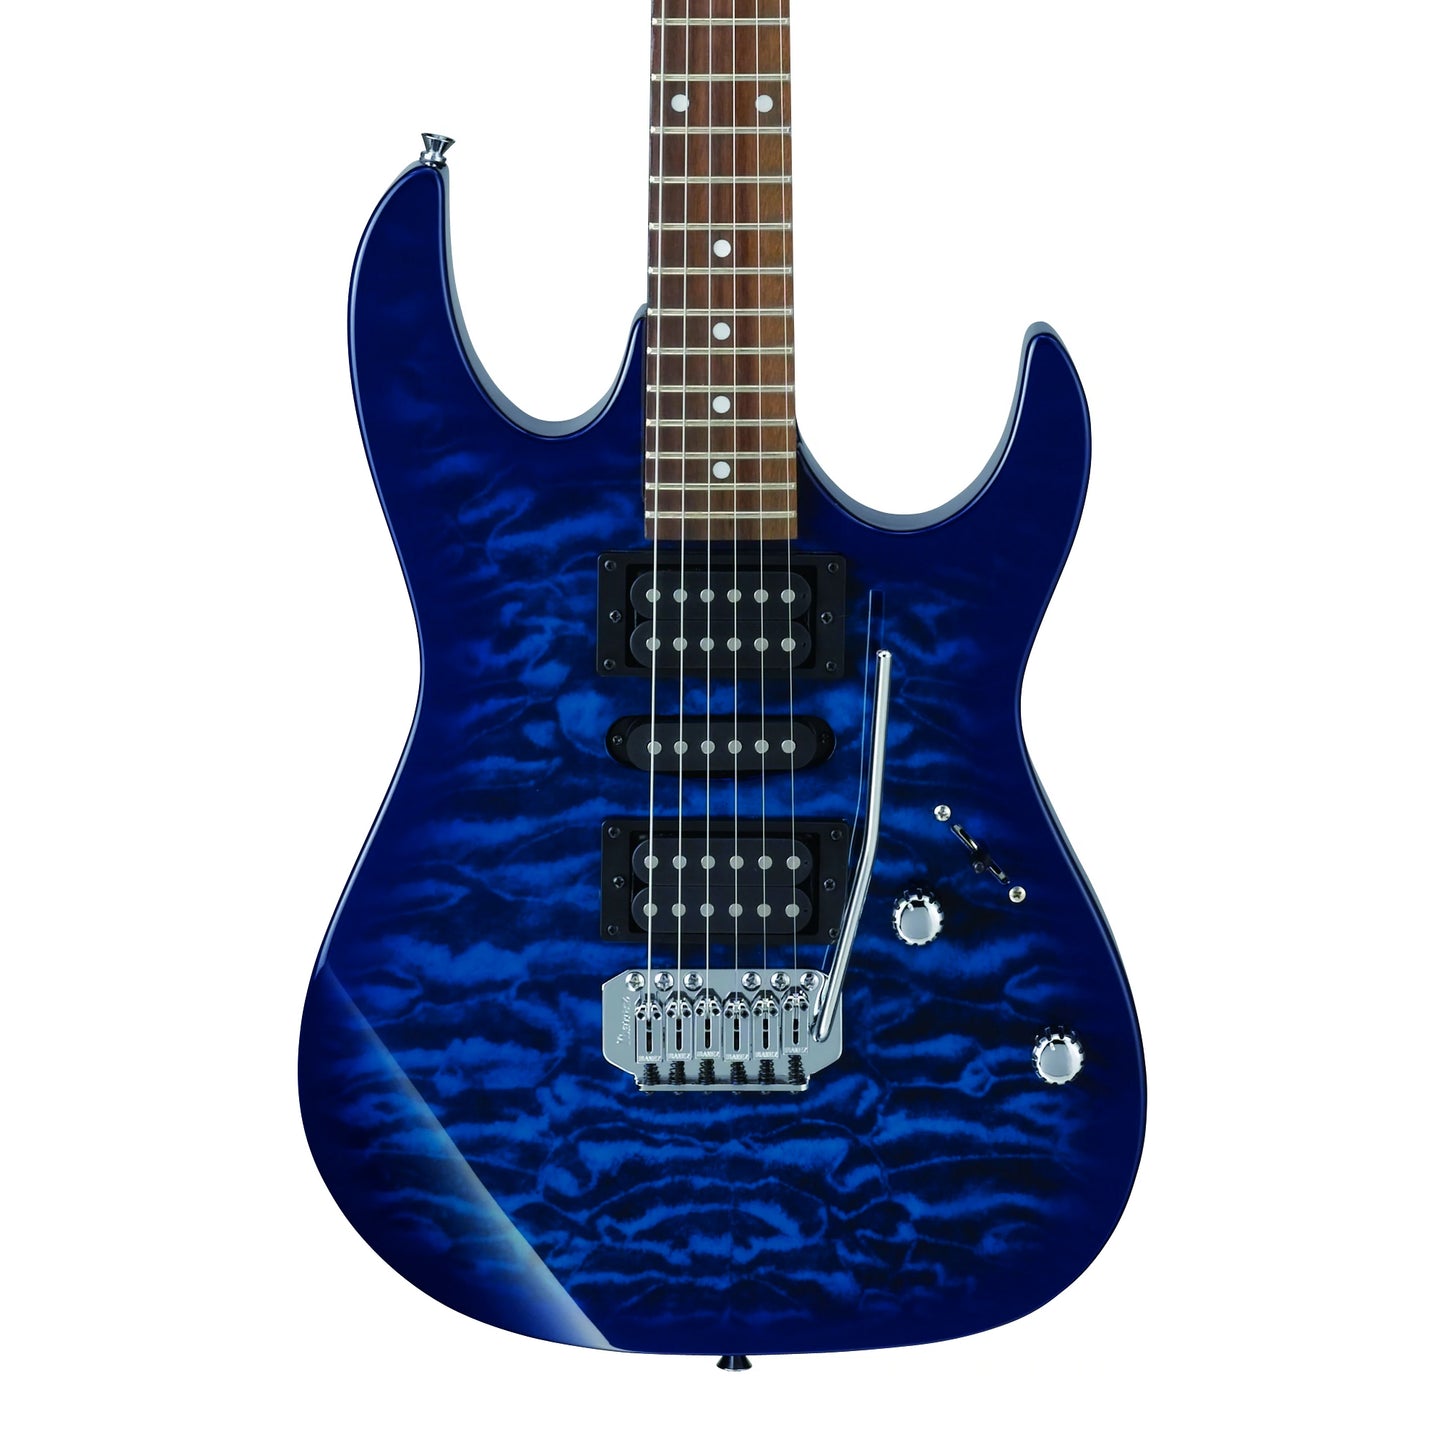 Ibanez GRX70QA Gio RX 6-String Electric Guitar - Transparent Blue Burst